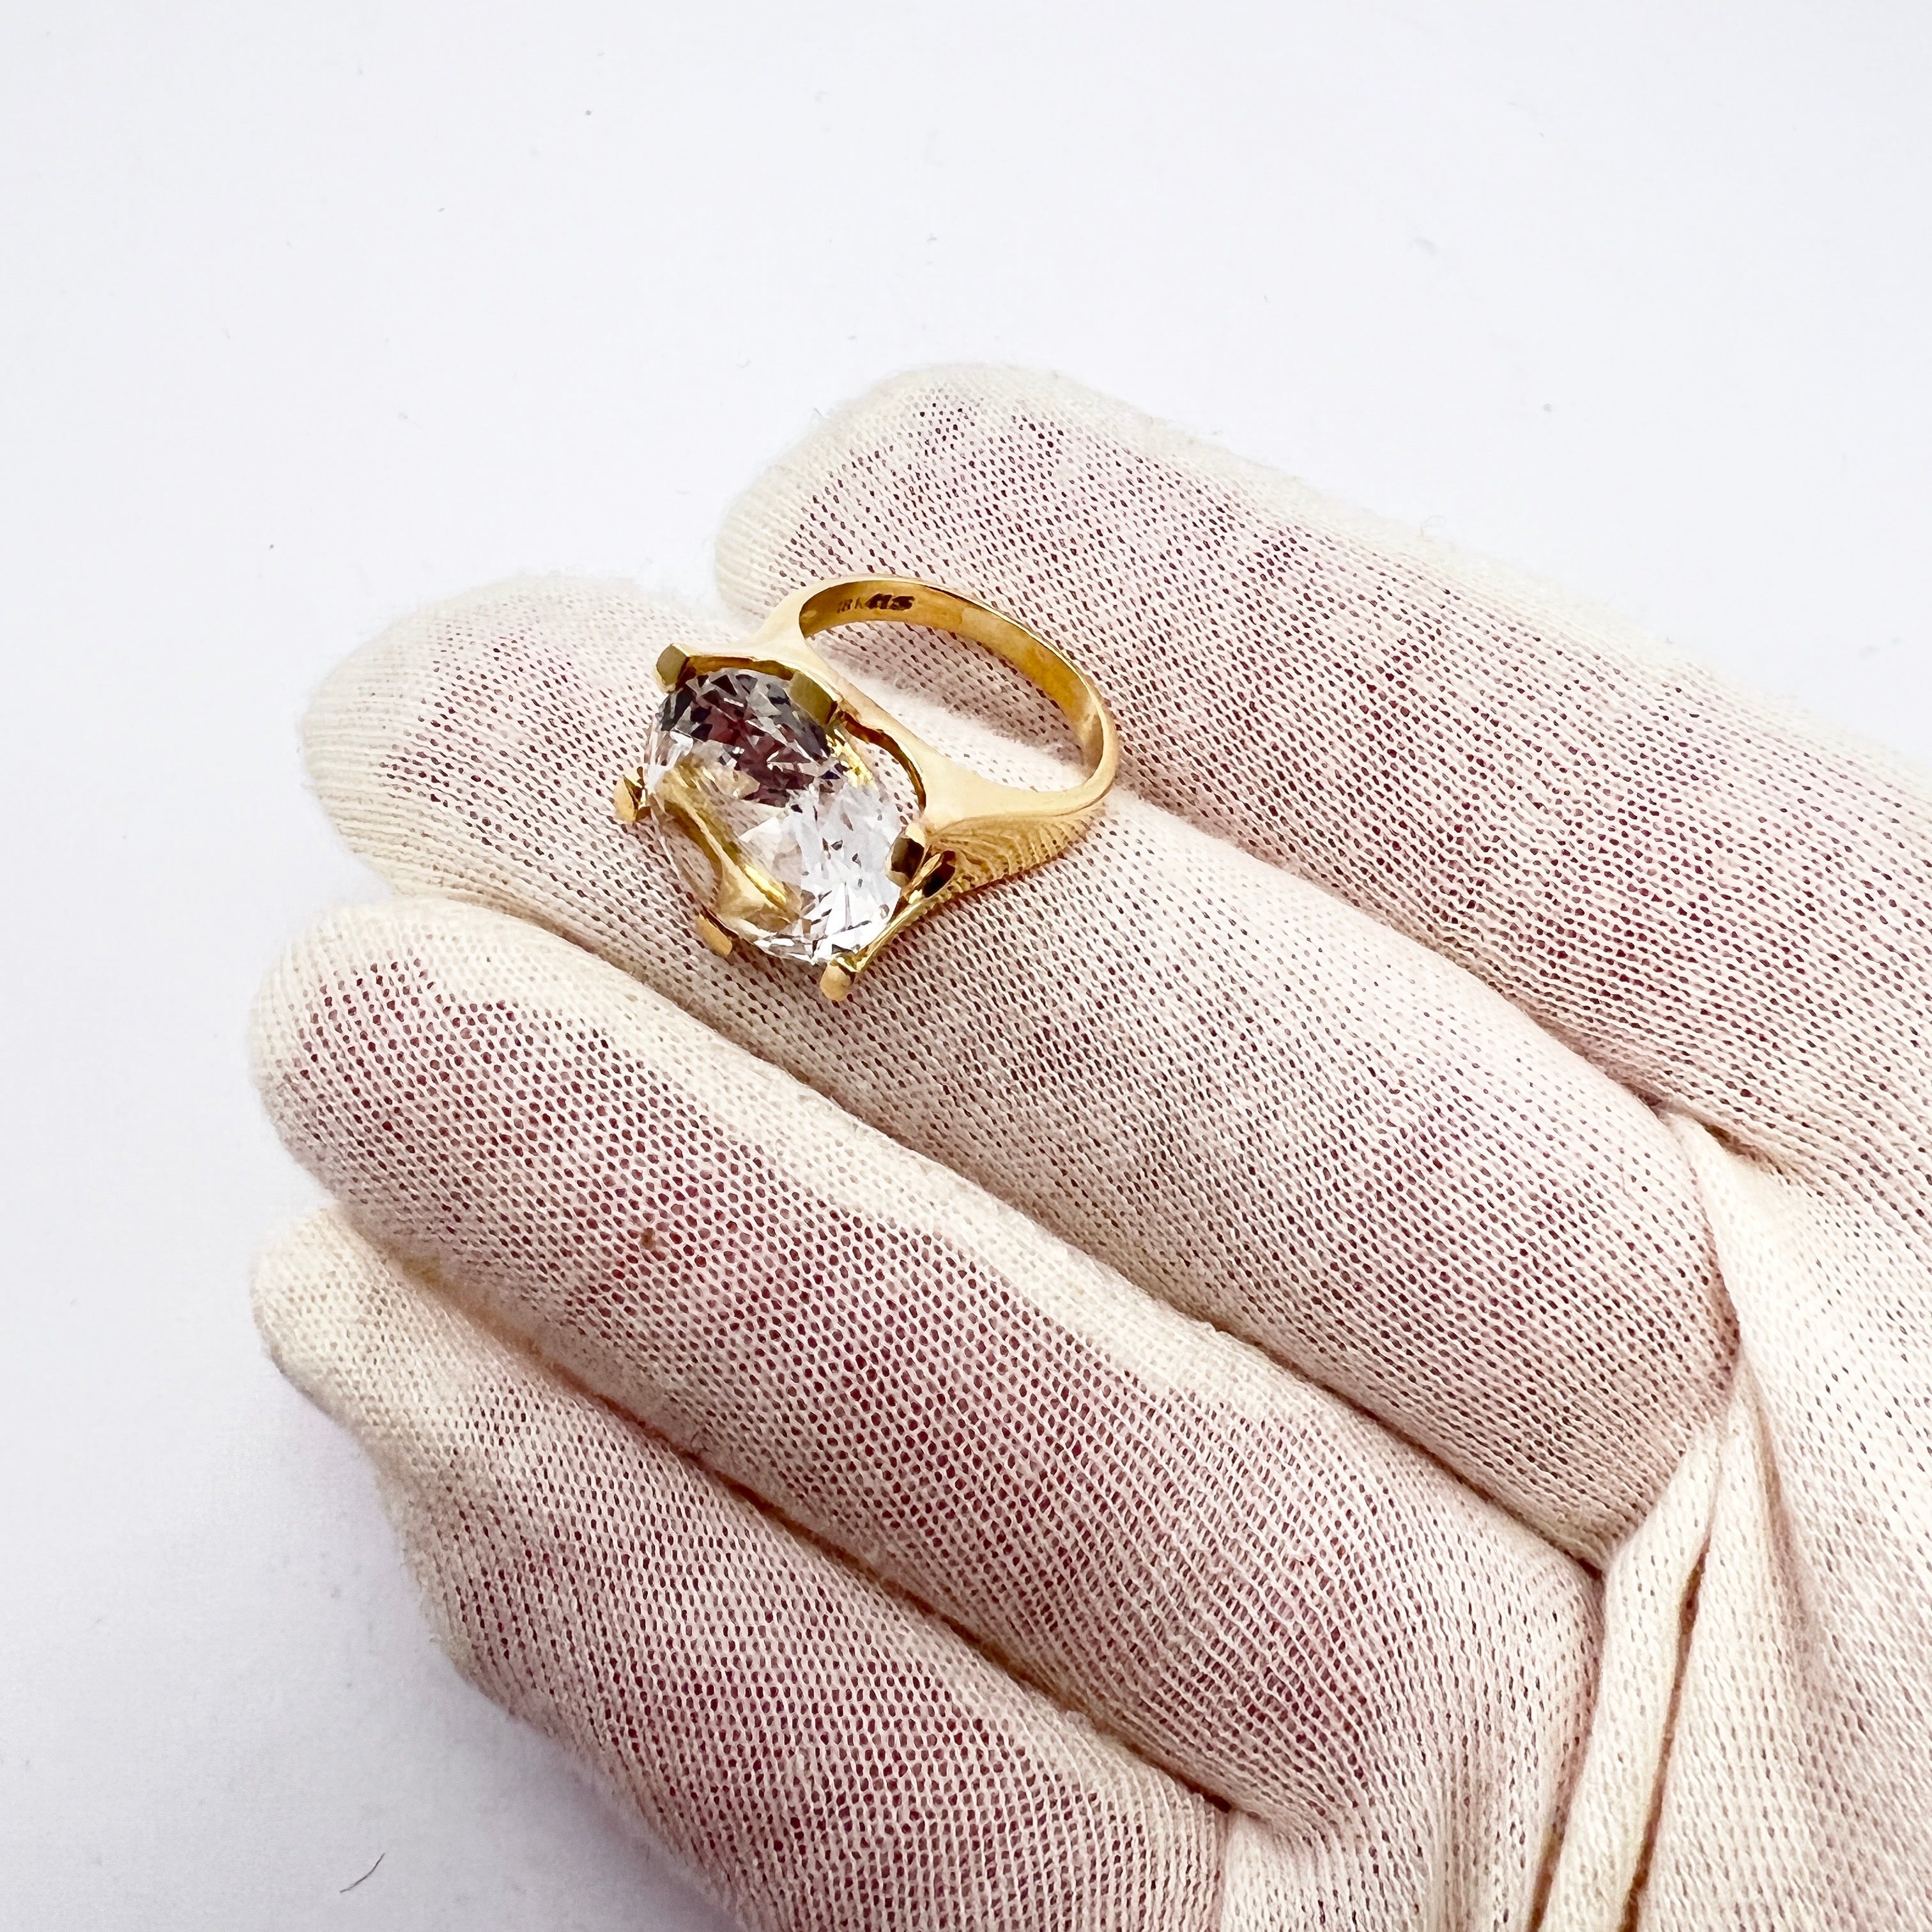 Herman Siersbøl Denmark 1960-70s. Bold Modernist 18k Gold Rock Crystal Ring. 8 gram